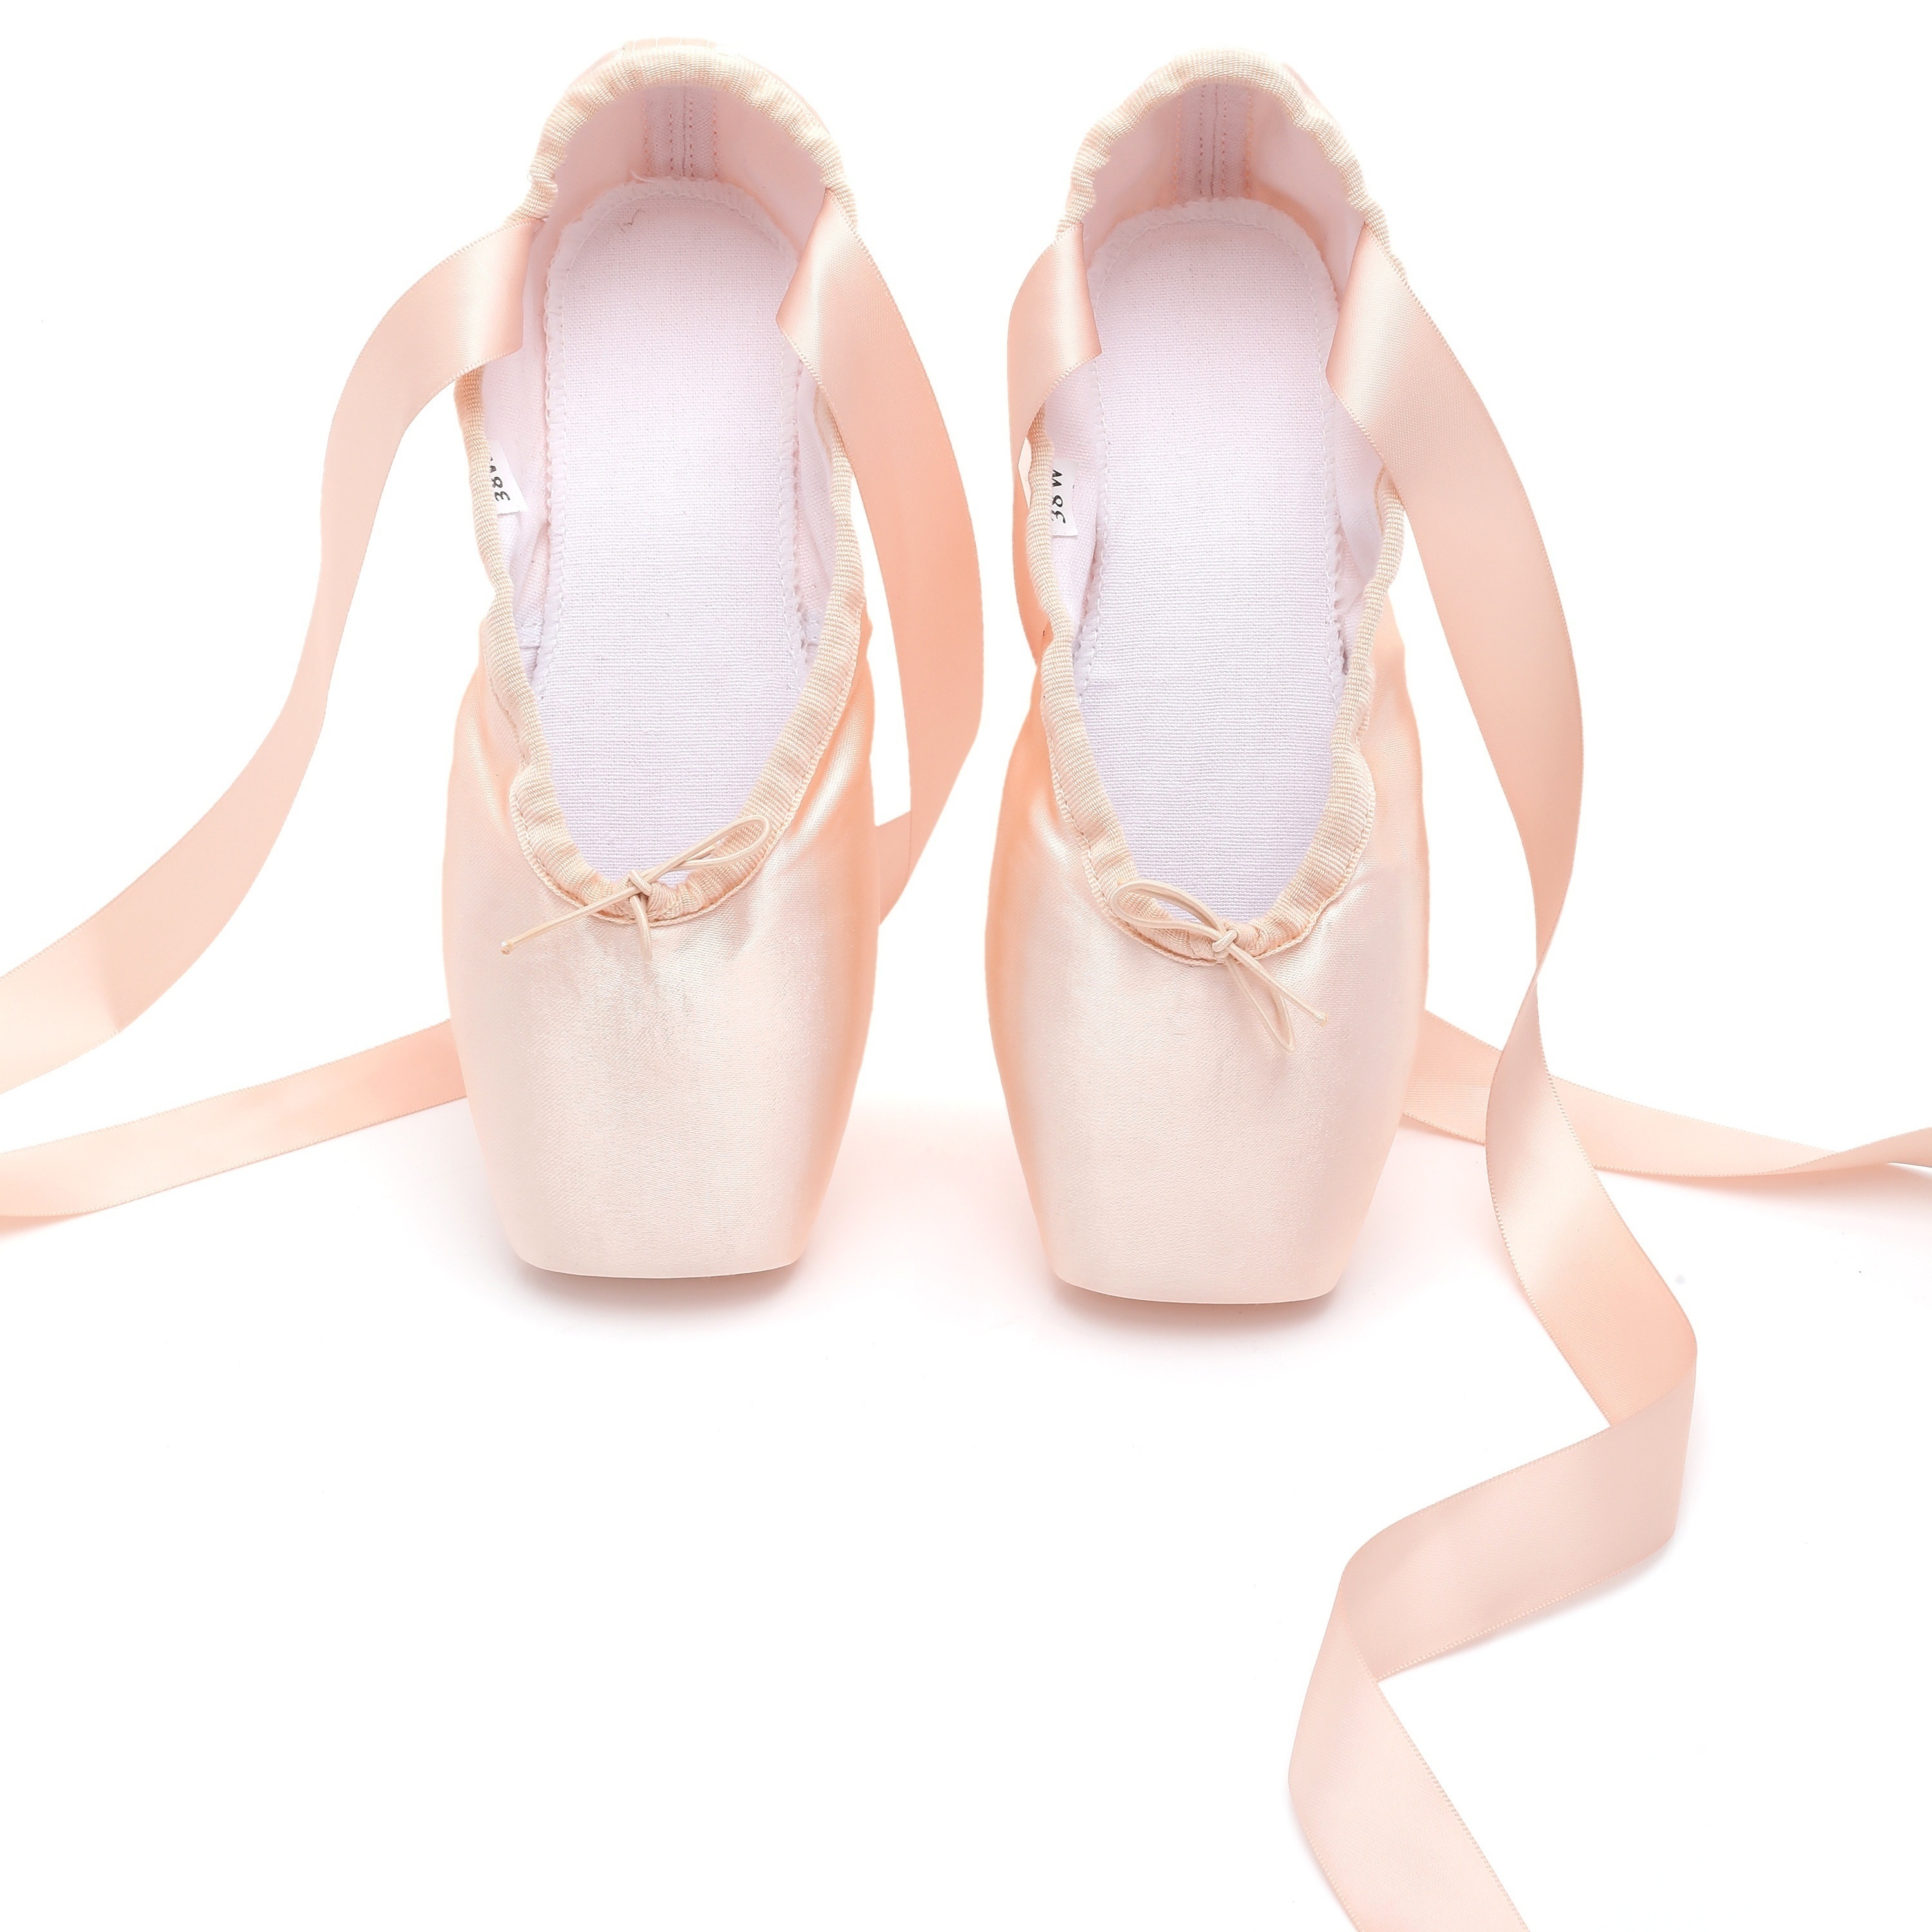  Zapatos de ballet Pointe, 3 pares de zapatos de ballet para  niñas, de lona con suela suave, zapatillas de ballet para practicar  bailarina, zapatos de baile para mujer (color : rojo